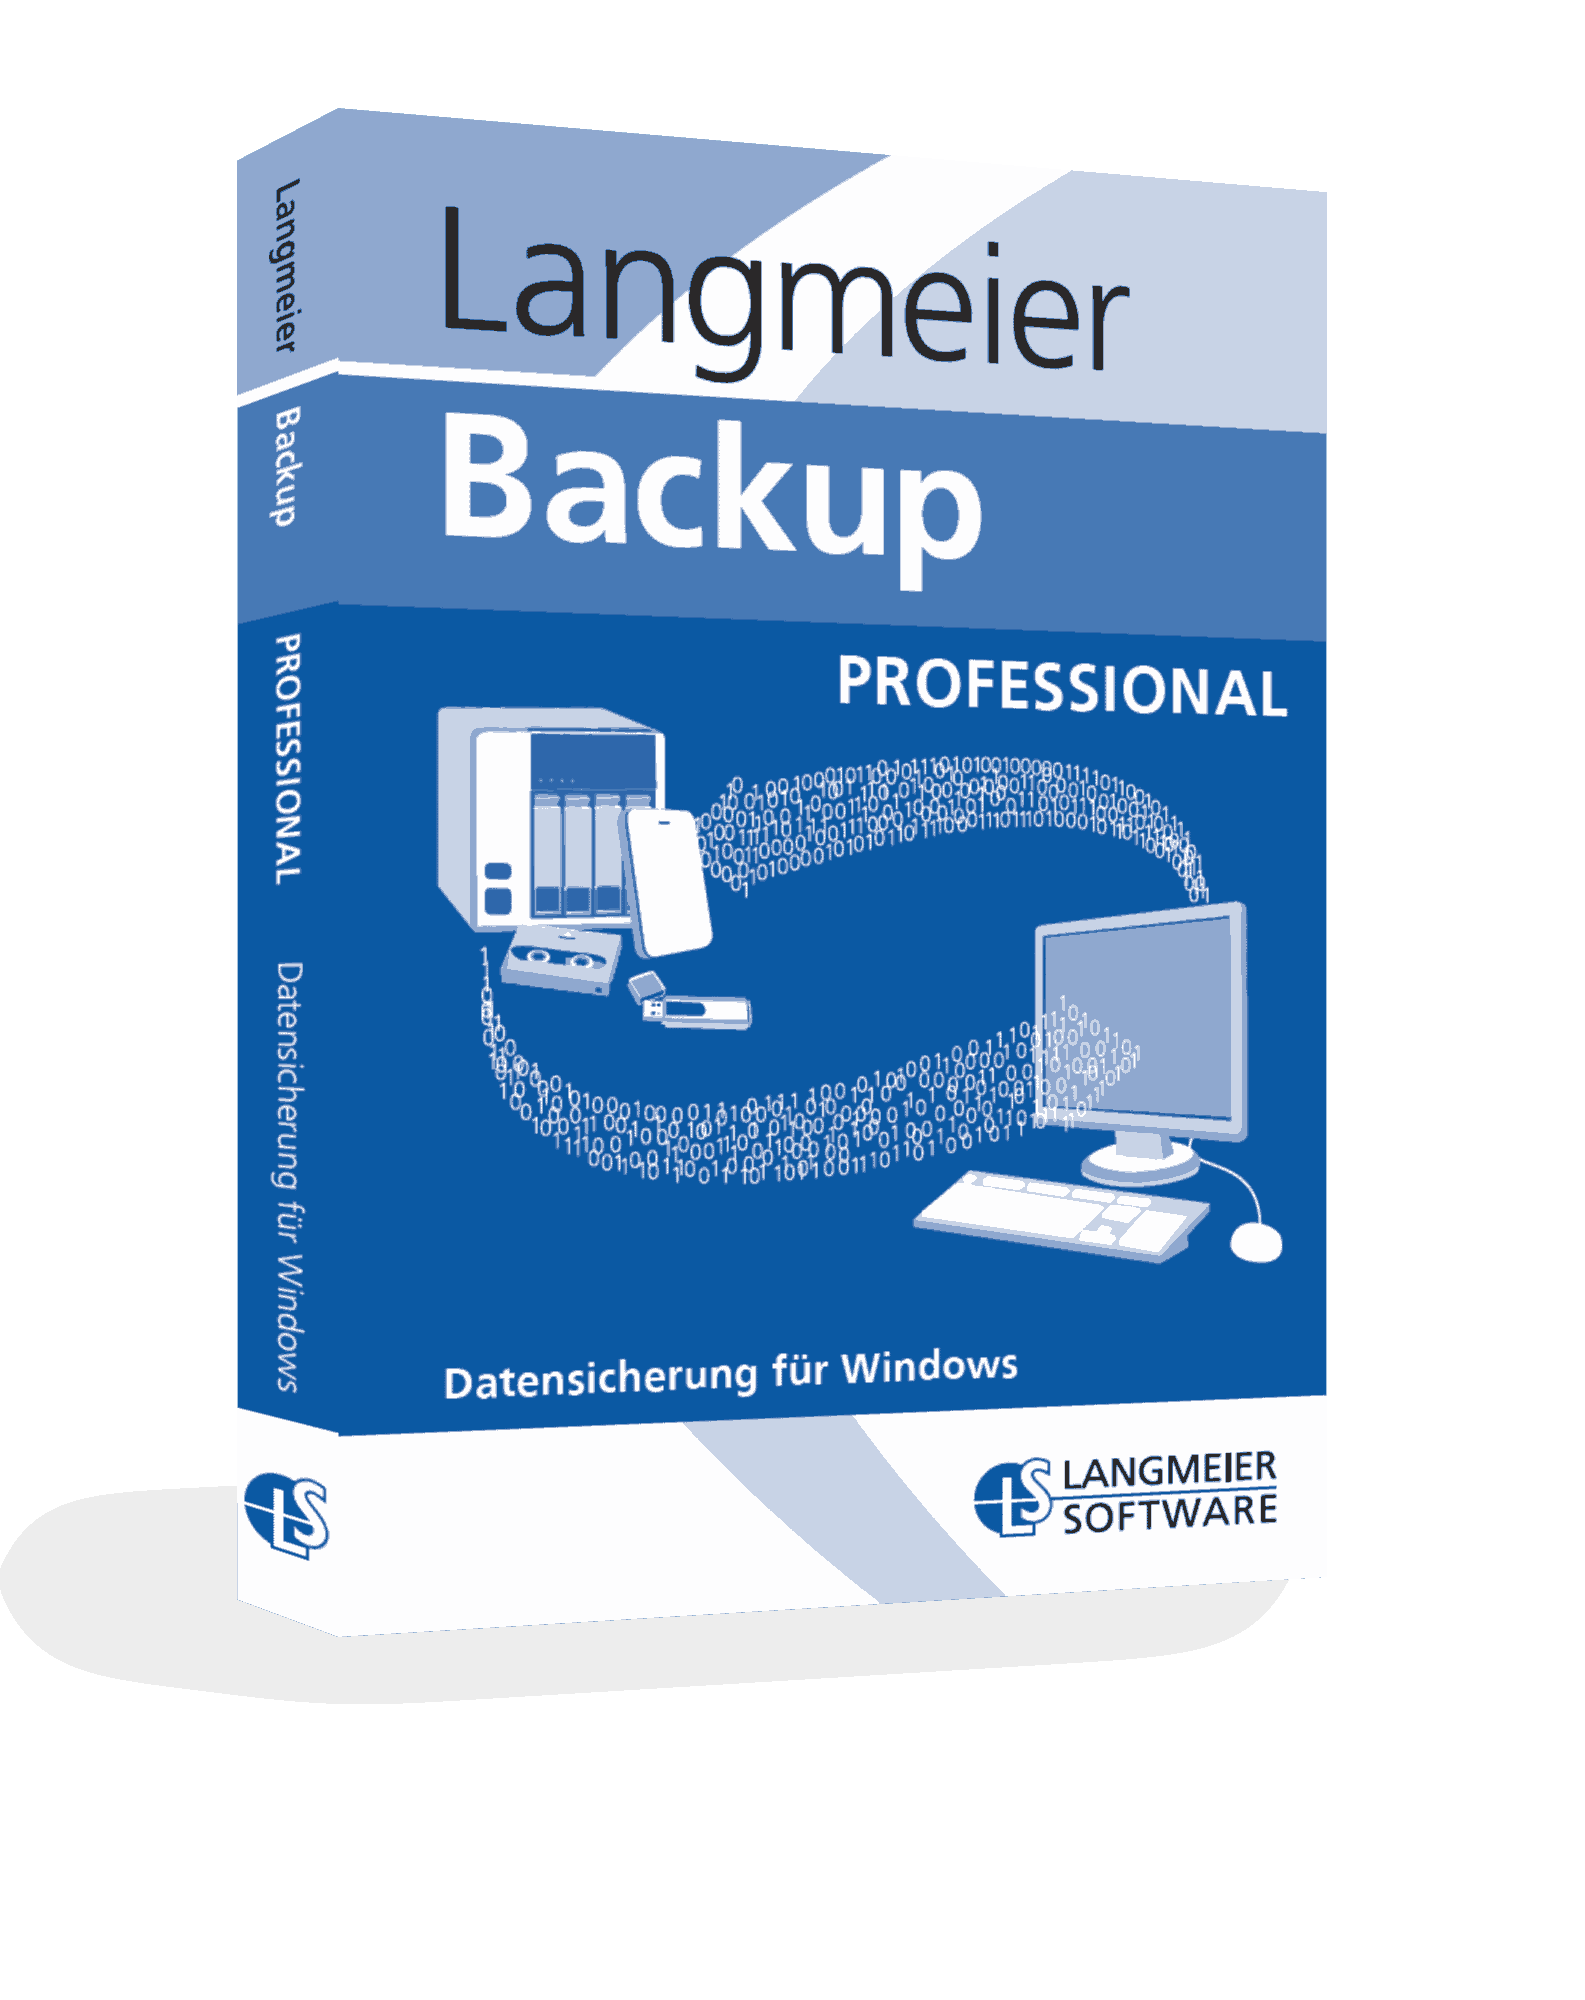 Langmeier Backup 12 Professional